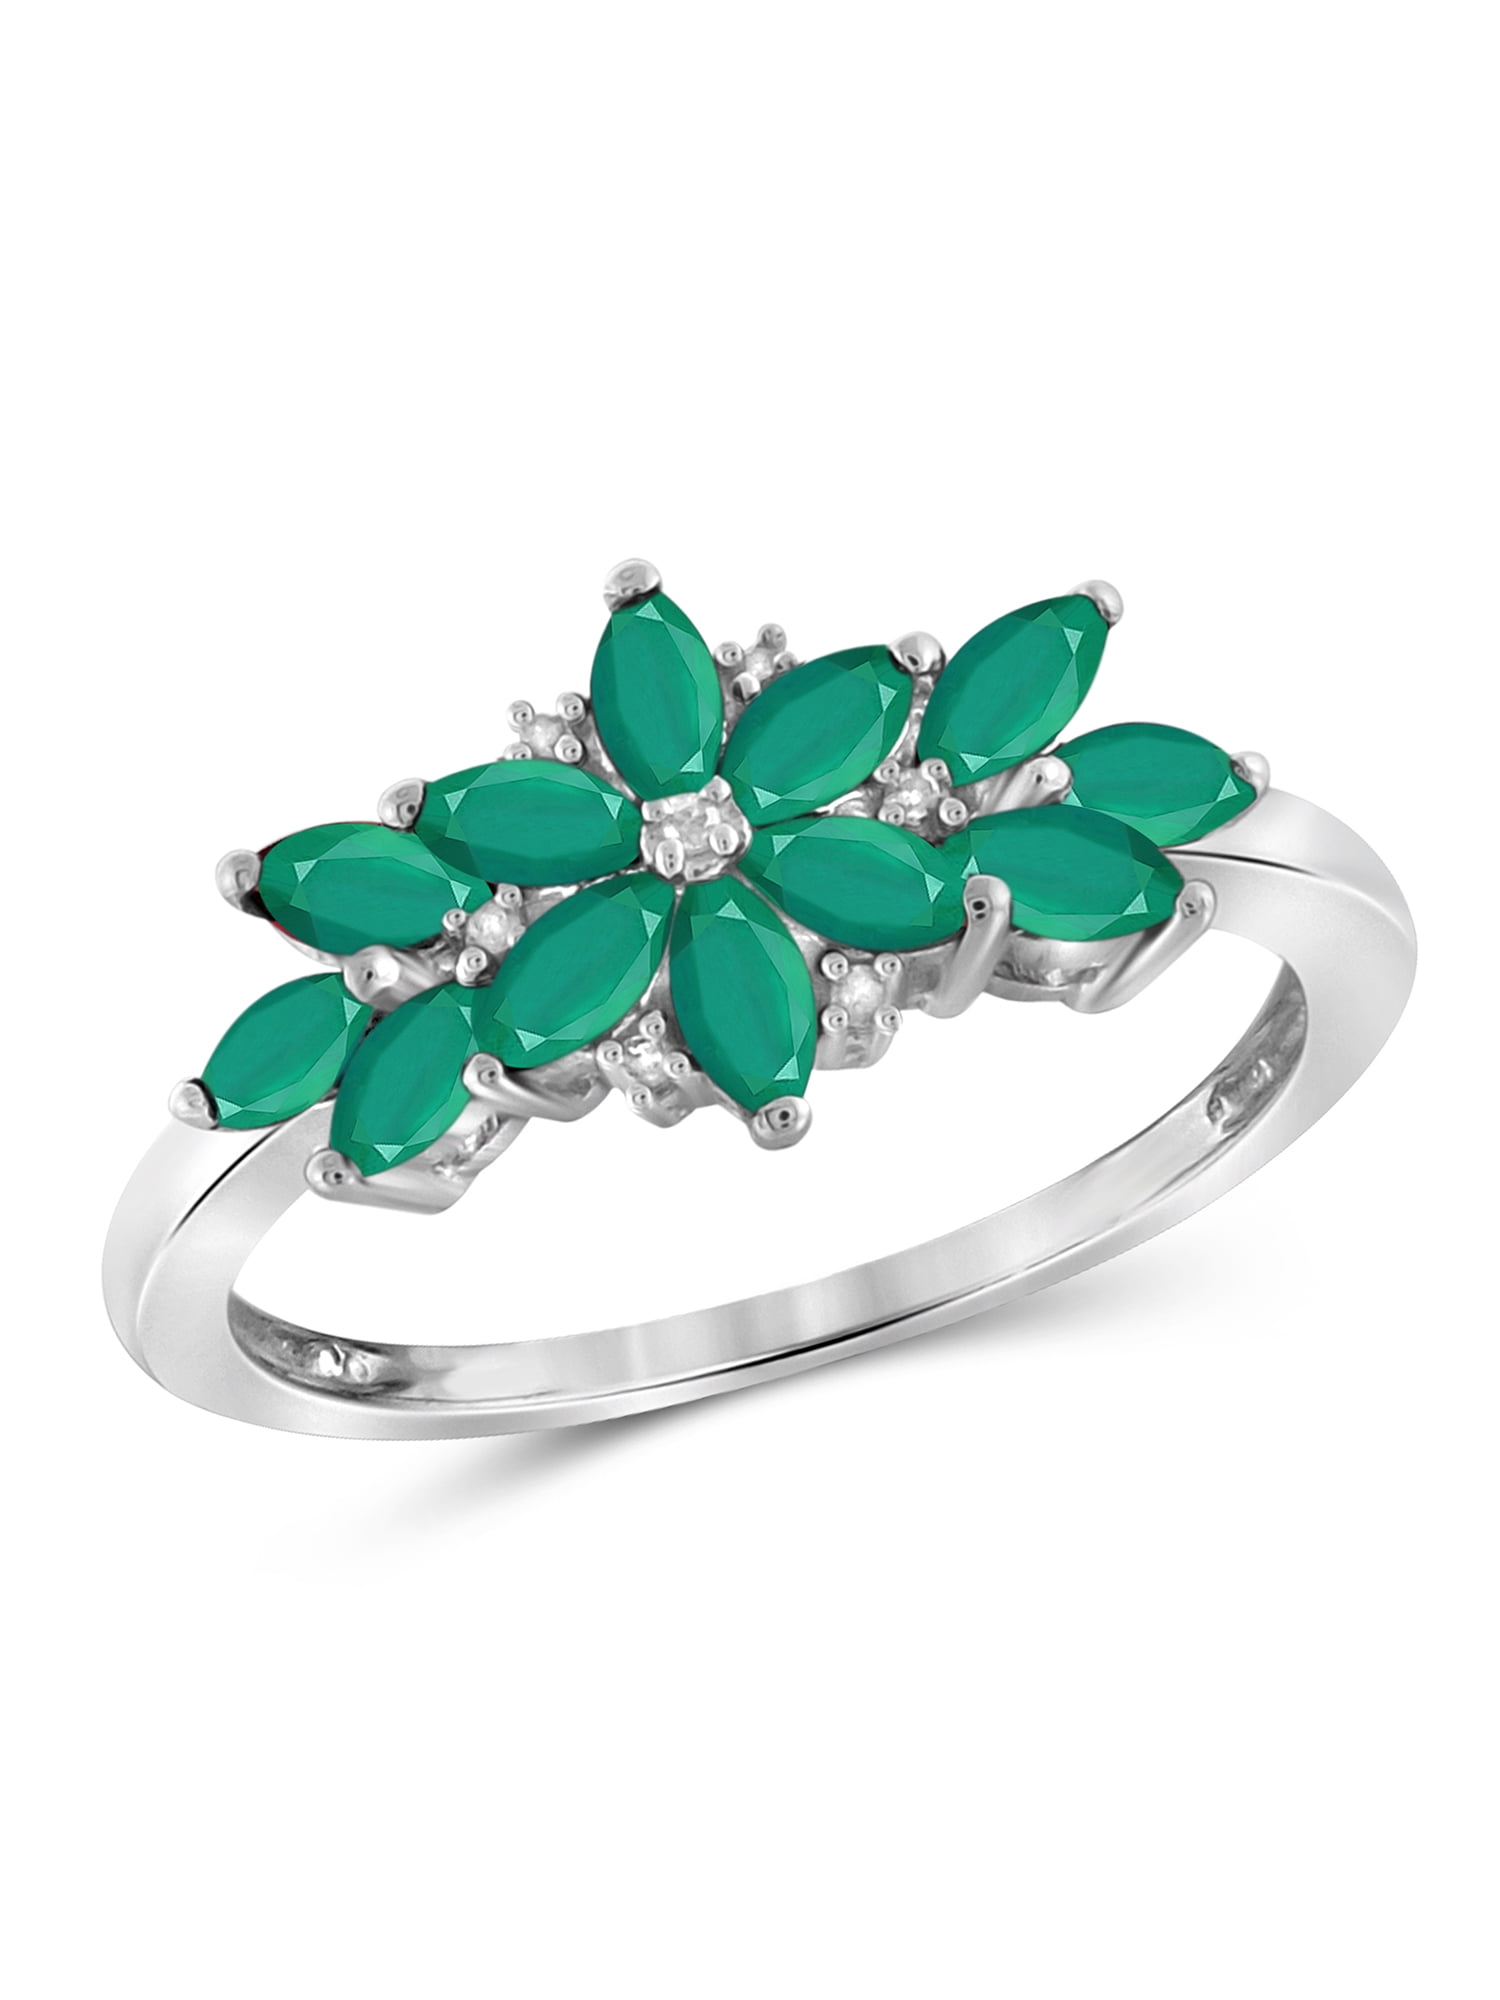 Emerald Ring Women A+ Luxury Quality - Zamurd Ring - Lab Certified